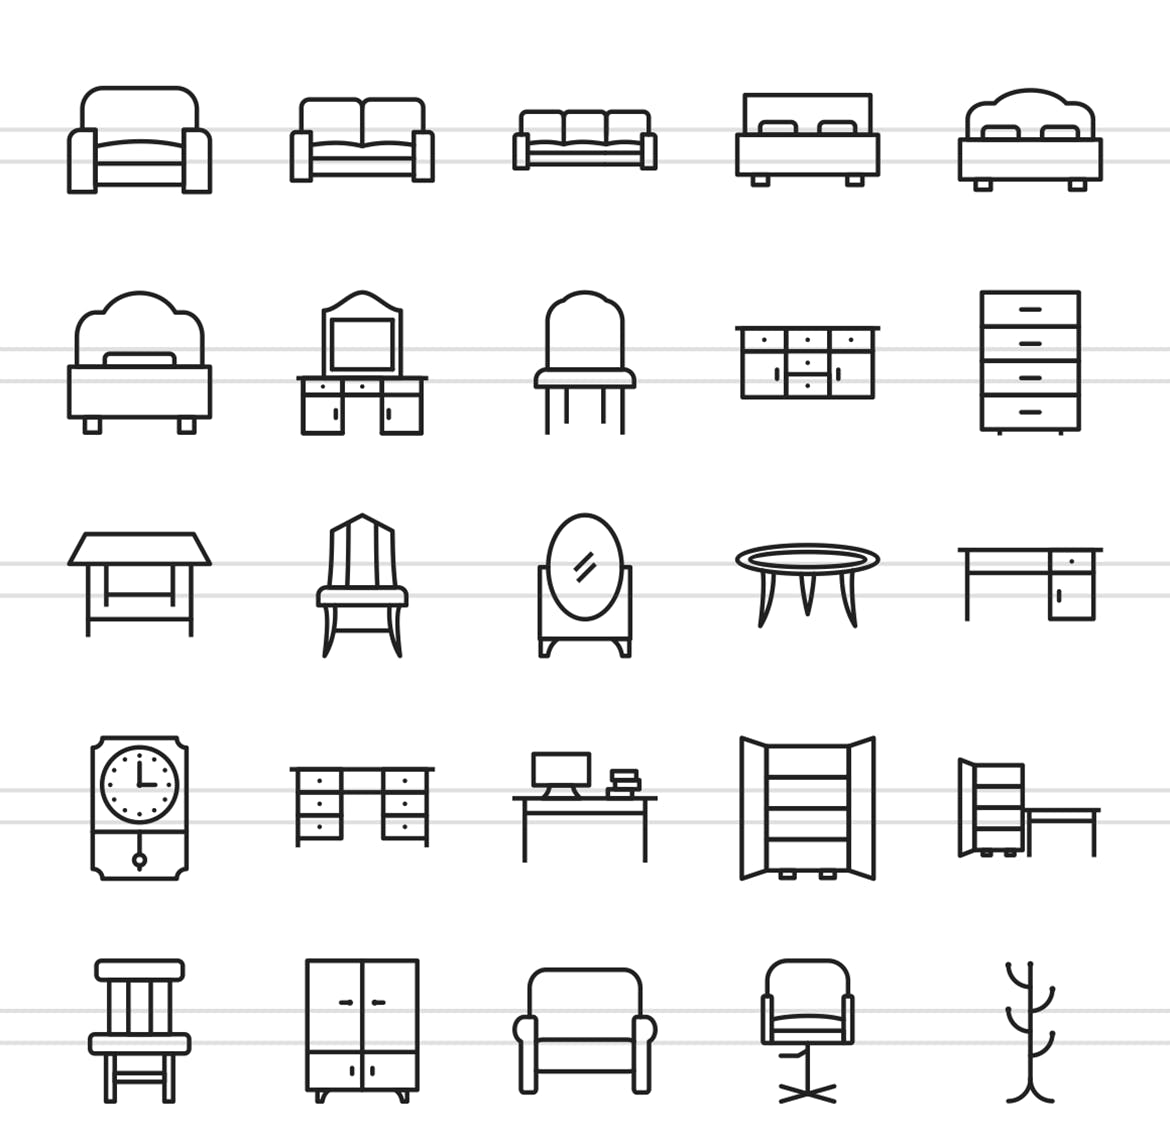 50枚家具系列线性蚂蚁素材精选图标 II 50 Furniture Line Icons Season II插图(1)